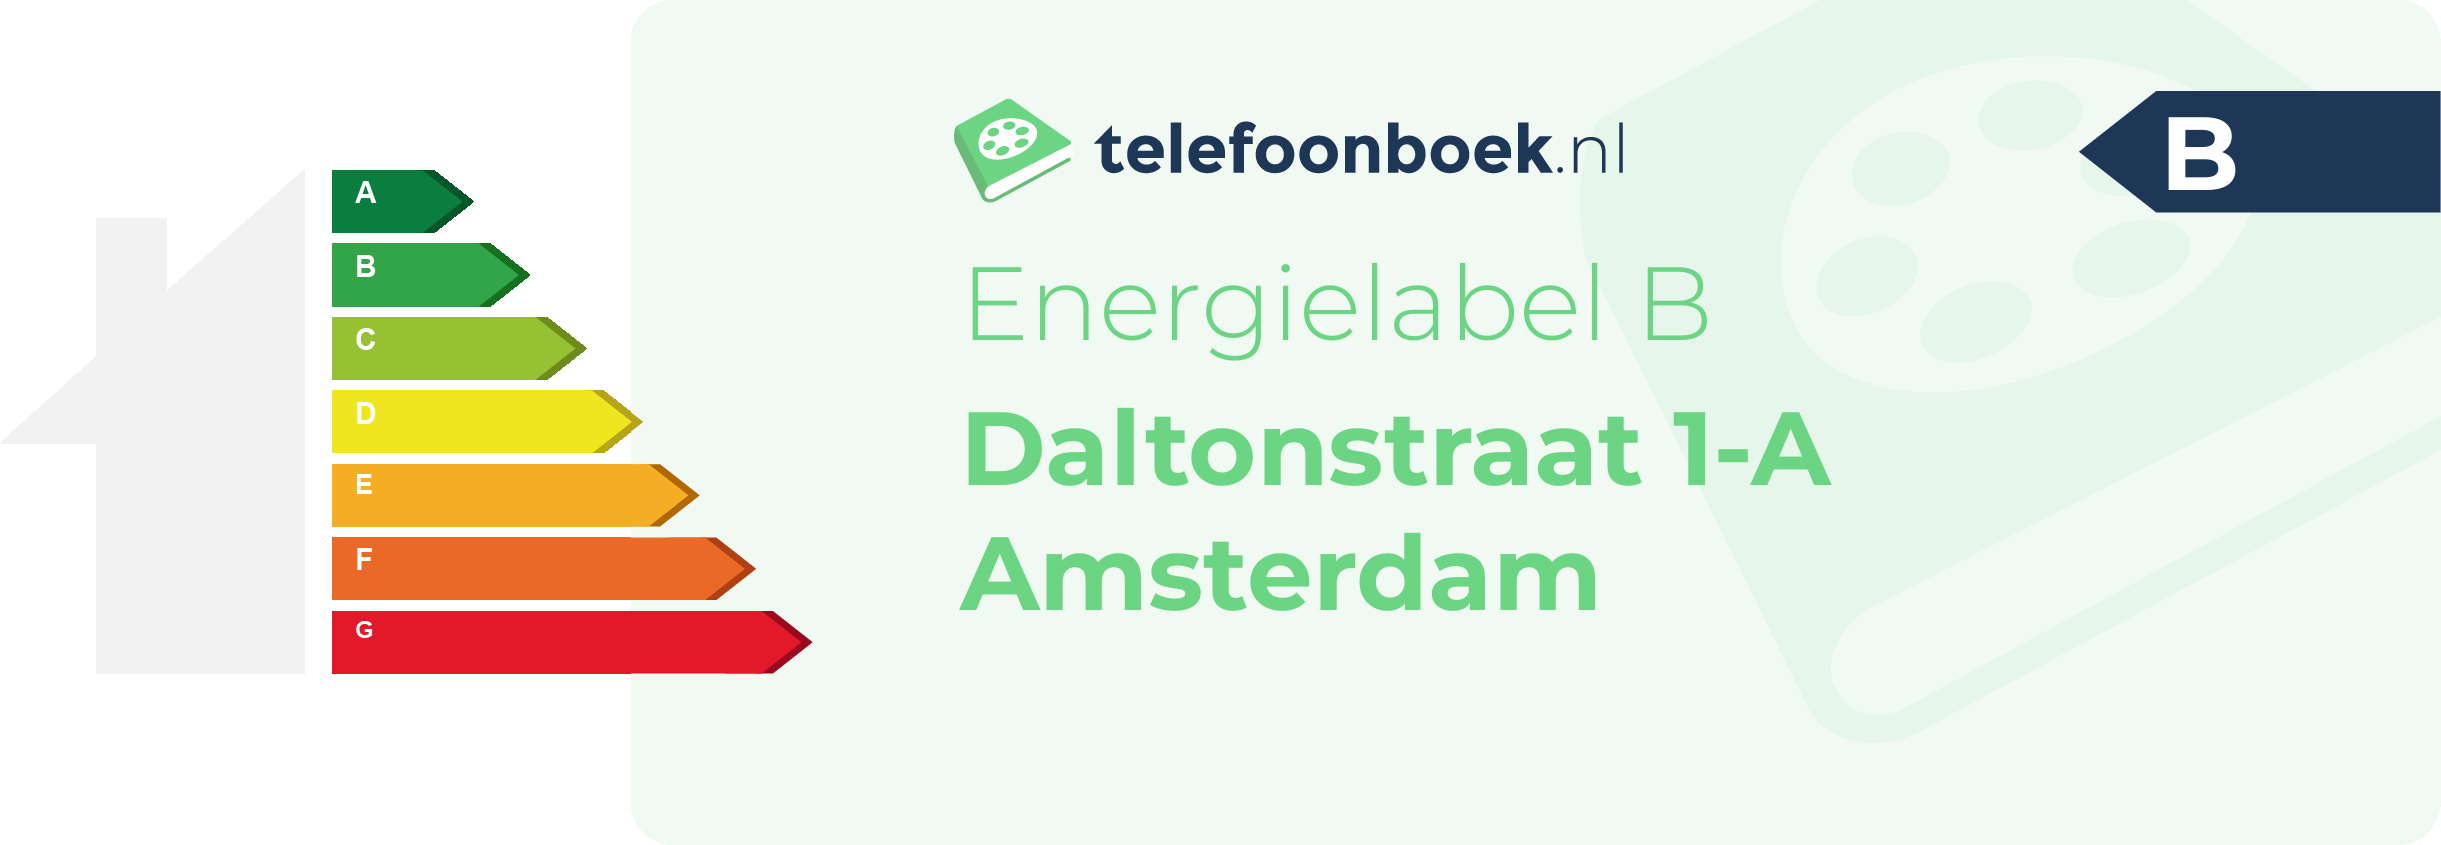 Energielabel Daltonstraat 1-A Amsterdam